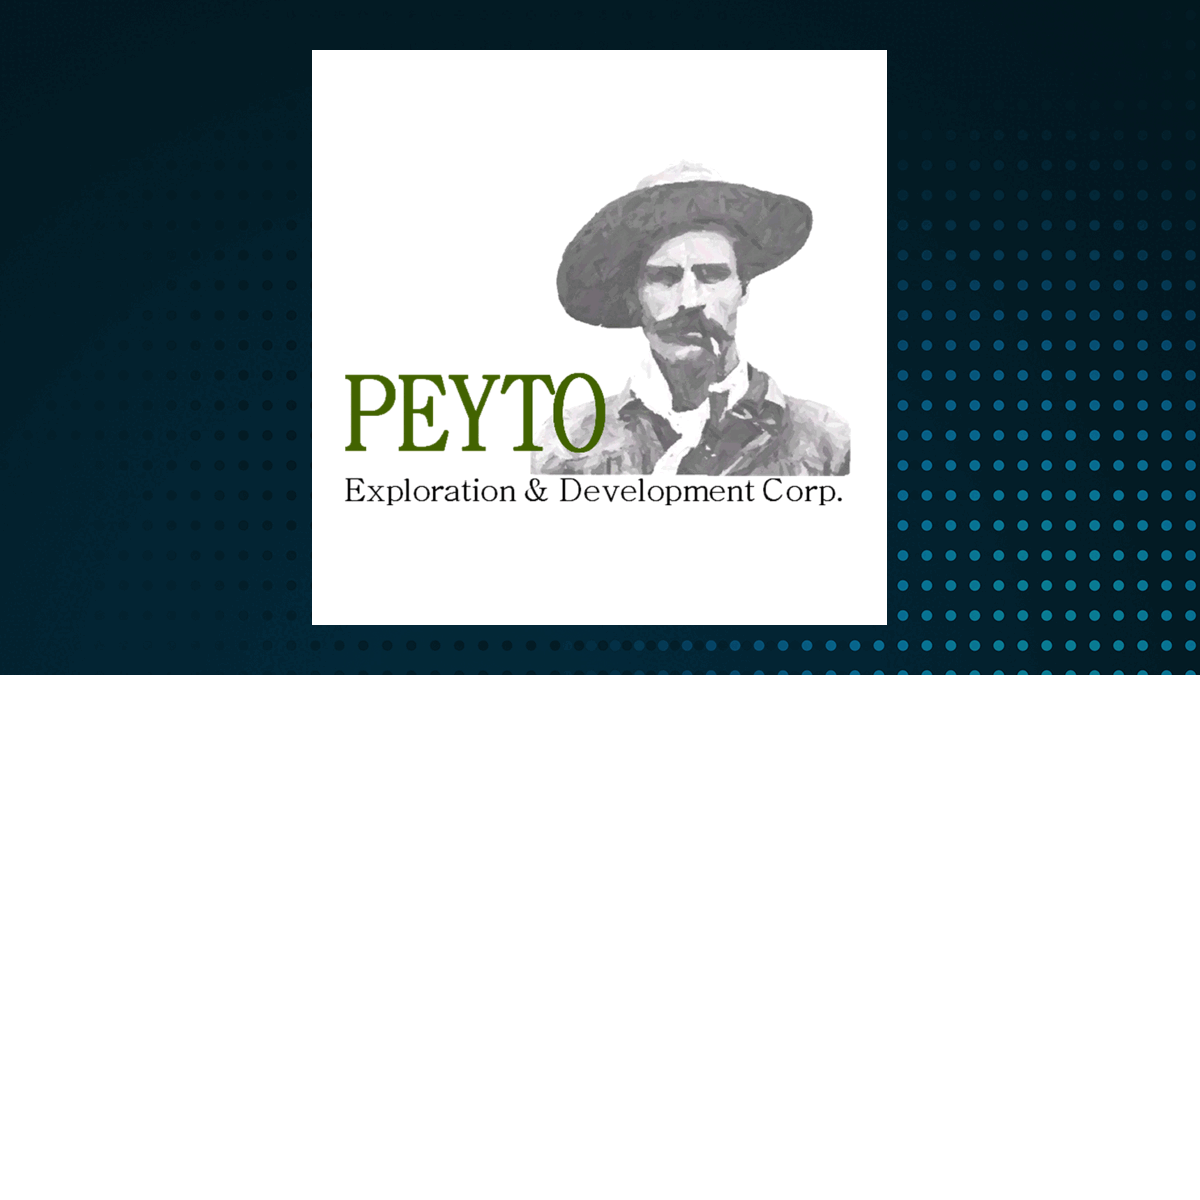 Peyto Exploration & Development logo